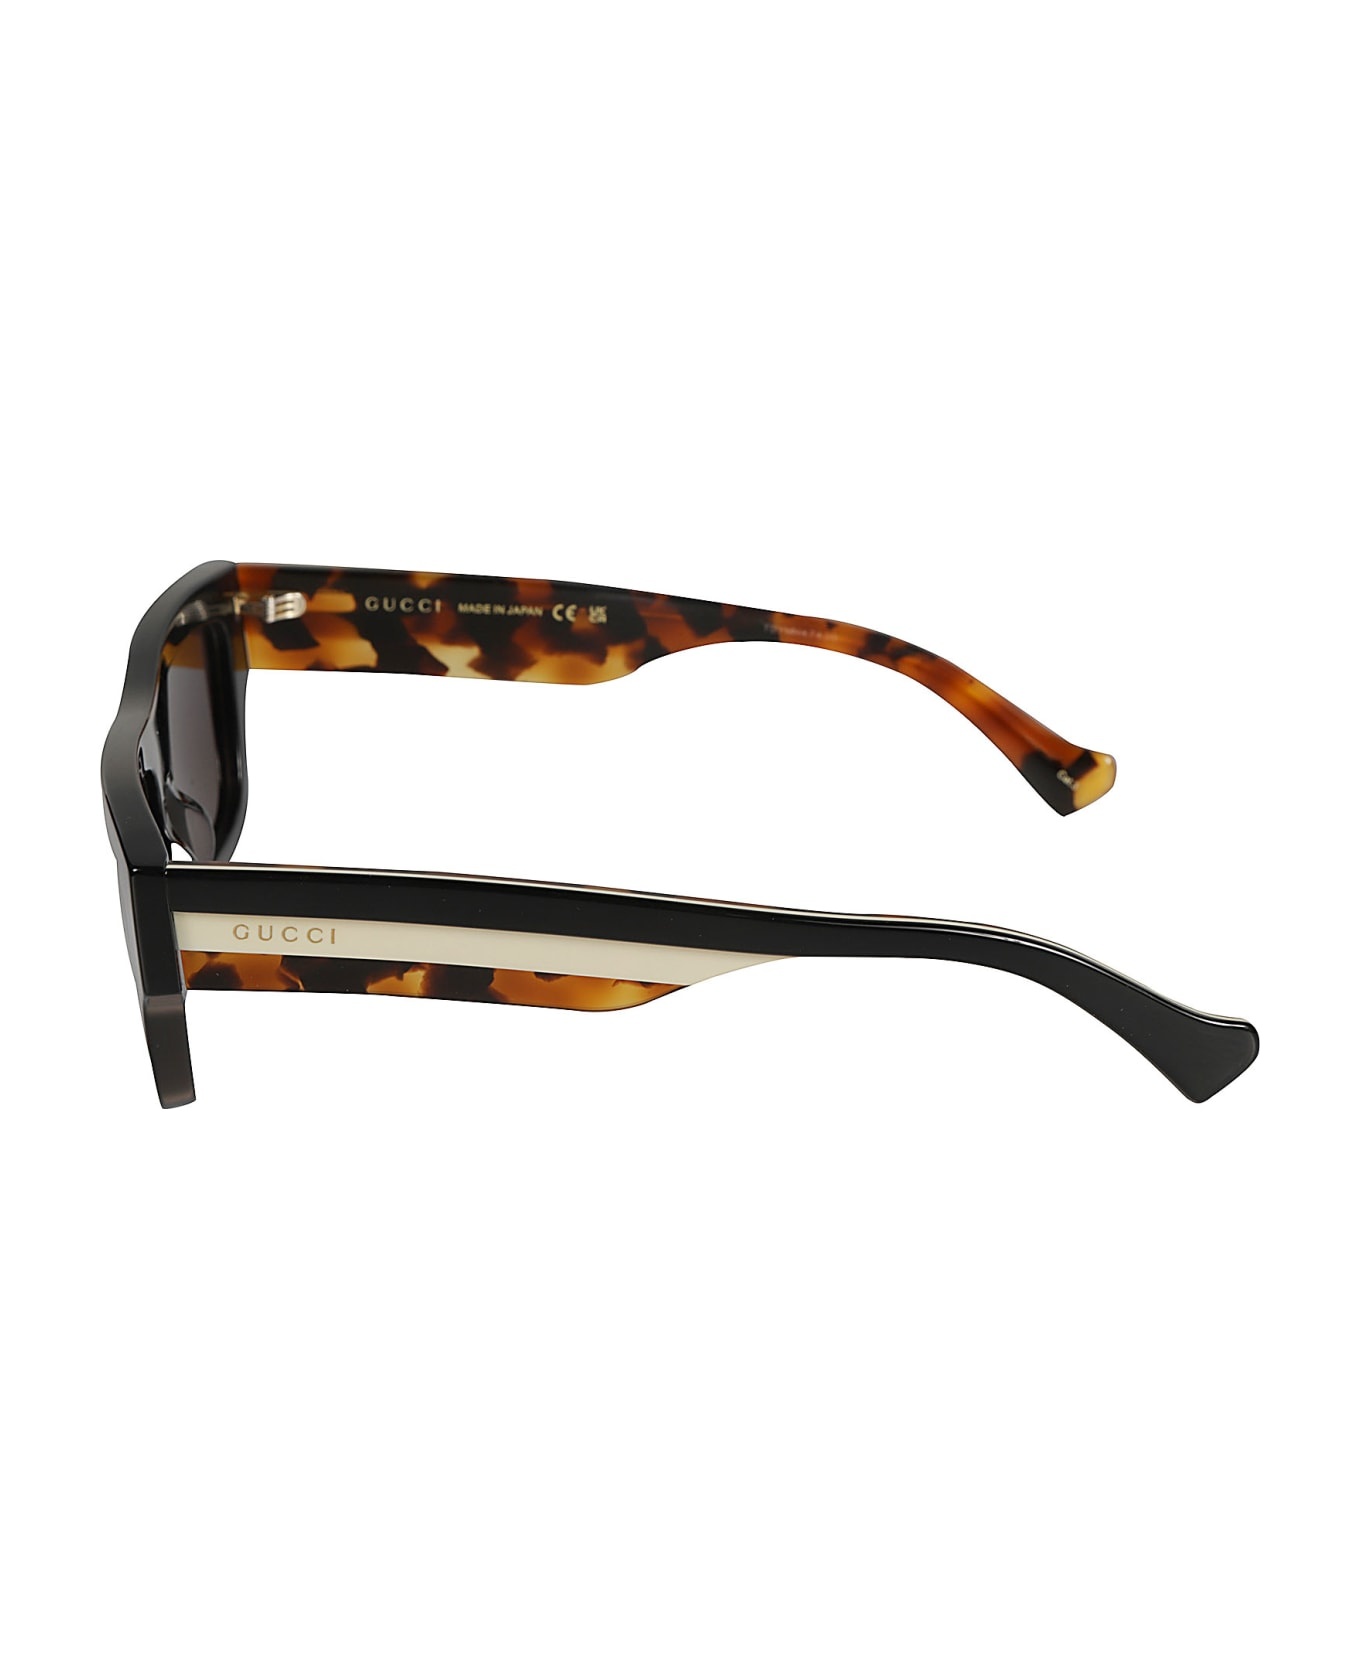 Flame Effect Classic Sunglasses - 3